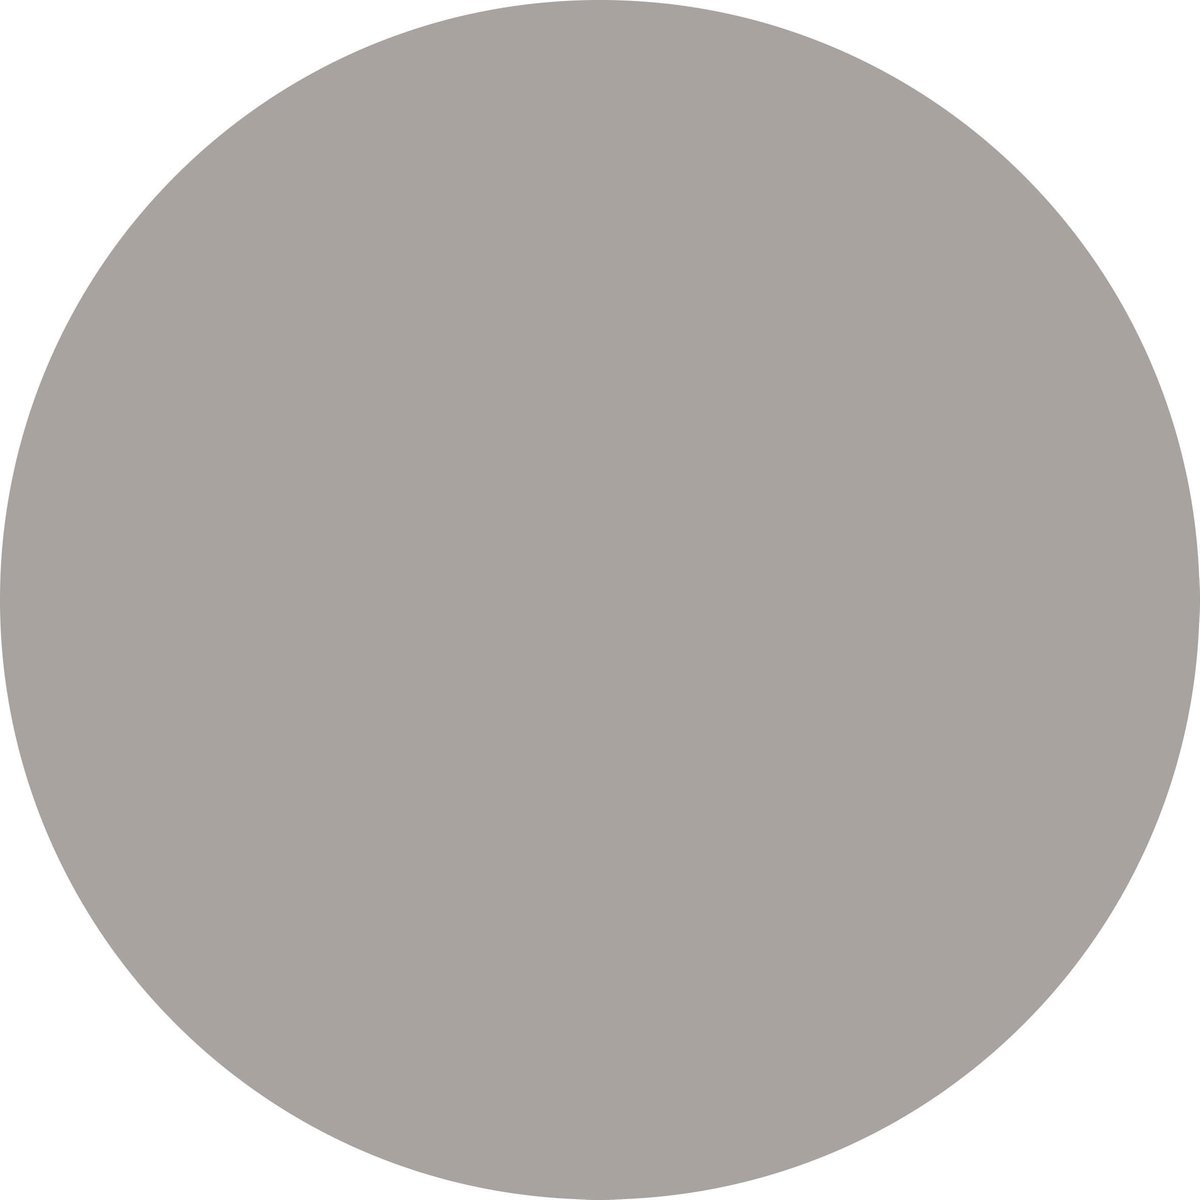 L'Oréal Paris Colorista Hair Makeup - Gray - Packaging damaged